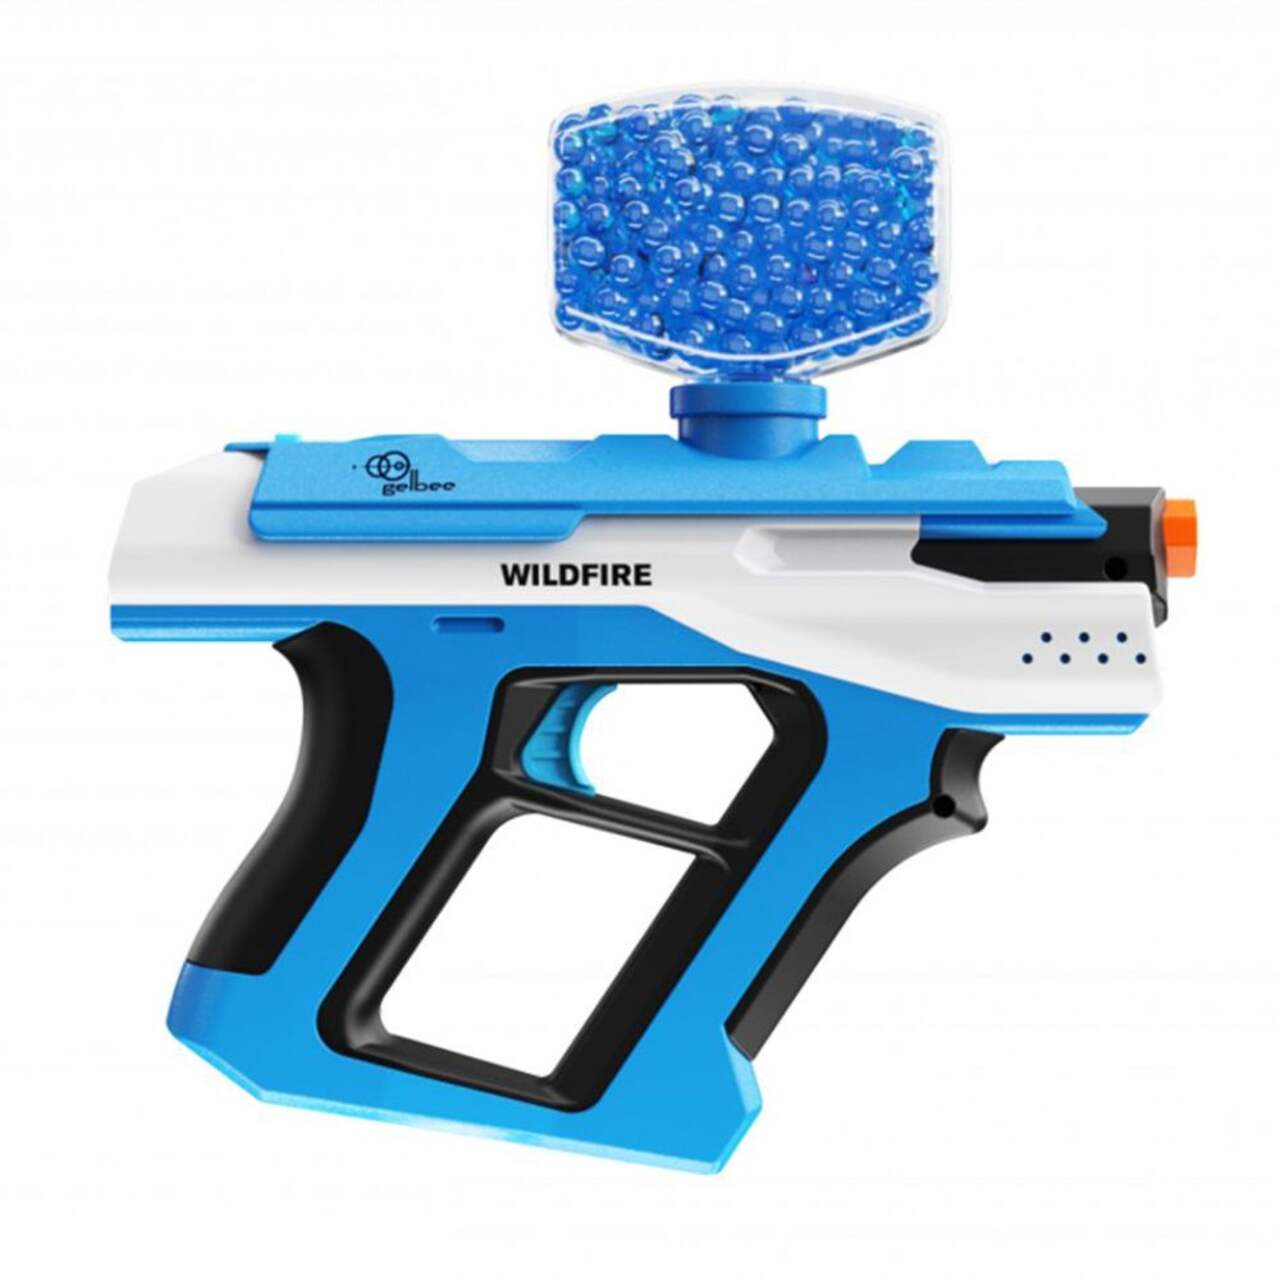 Crossman Wildfire Gelbee Ambidextrous Shooters Package, 2-pk, Plastic, Blue